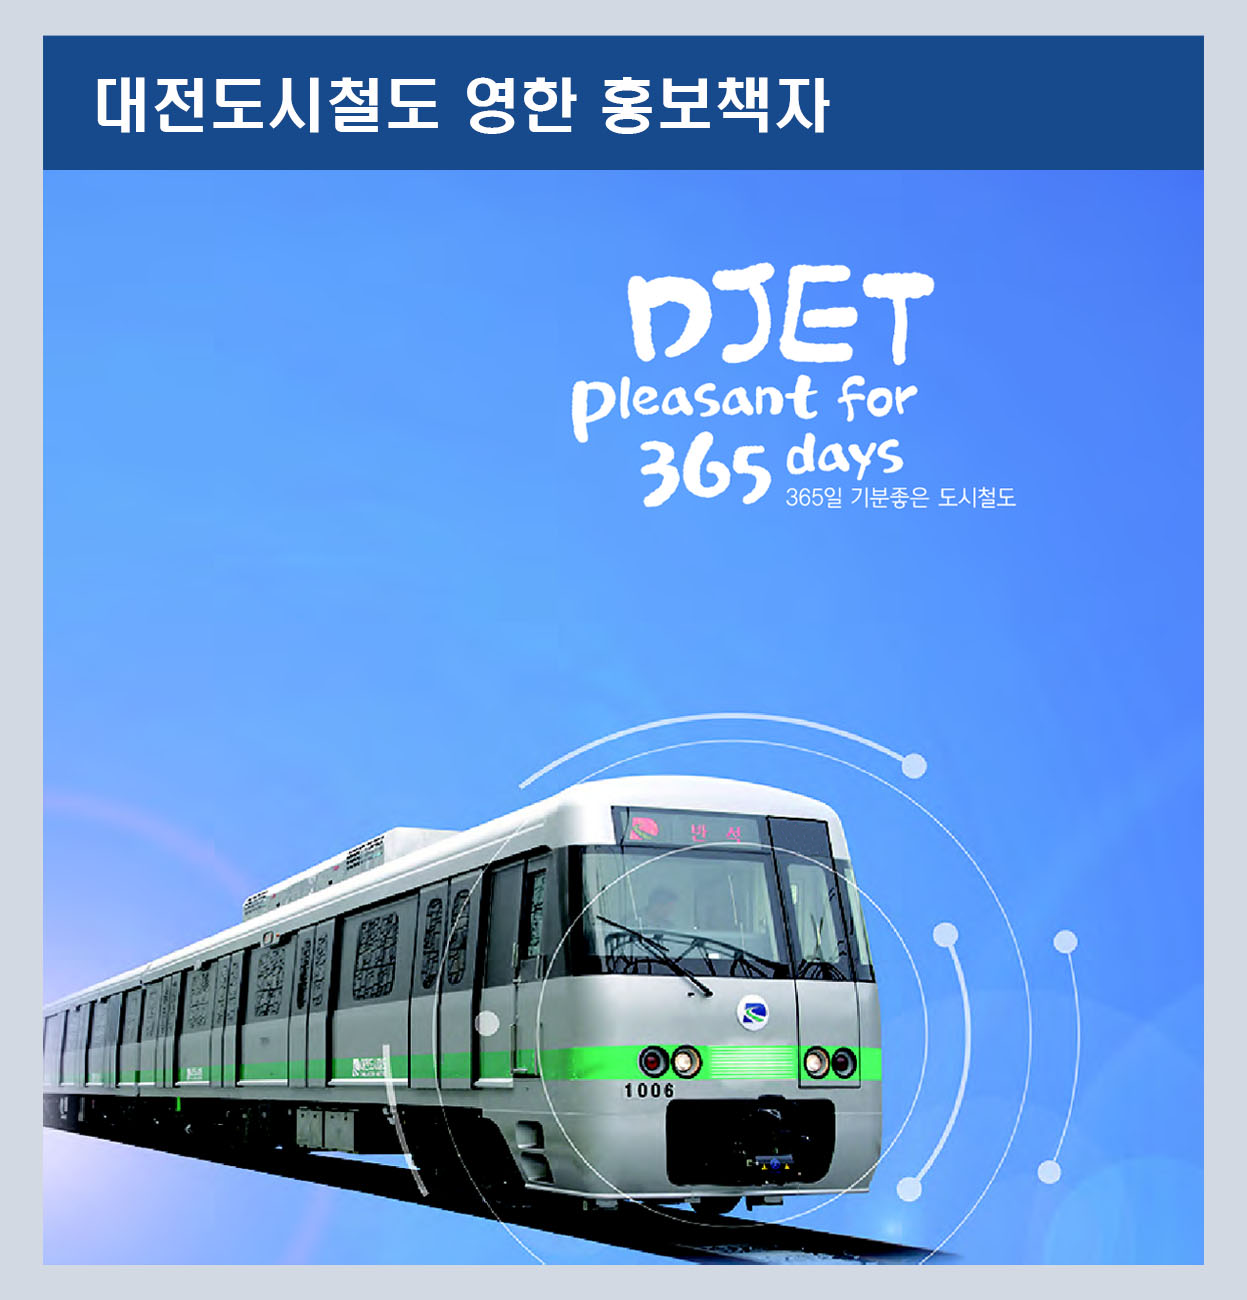 Djet informaion brochure(대전도시철도 영어-한글 홍보 책자)